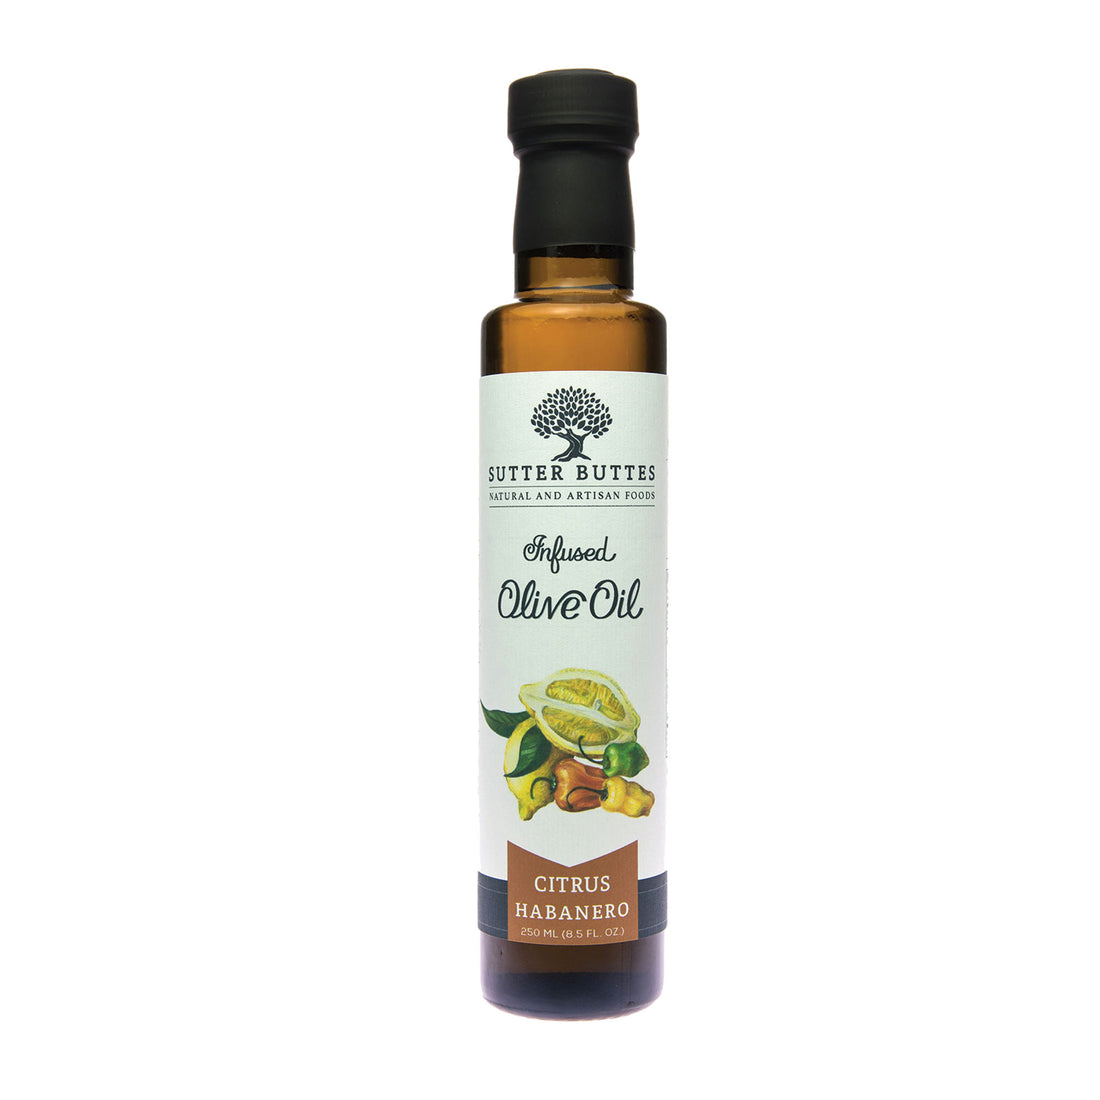 Citrus Habanero Olive Oil, 250 ml